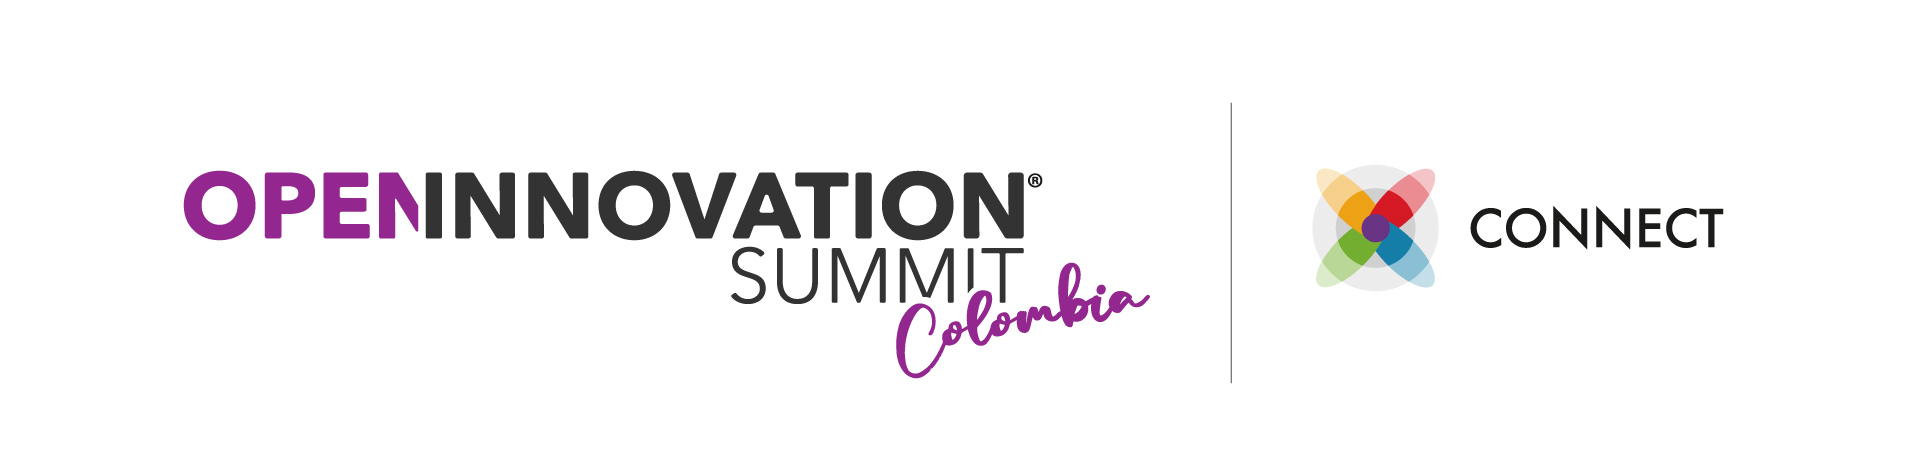 Open Innovation & Investor Summit Colombia